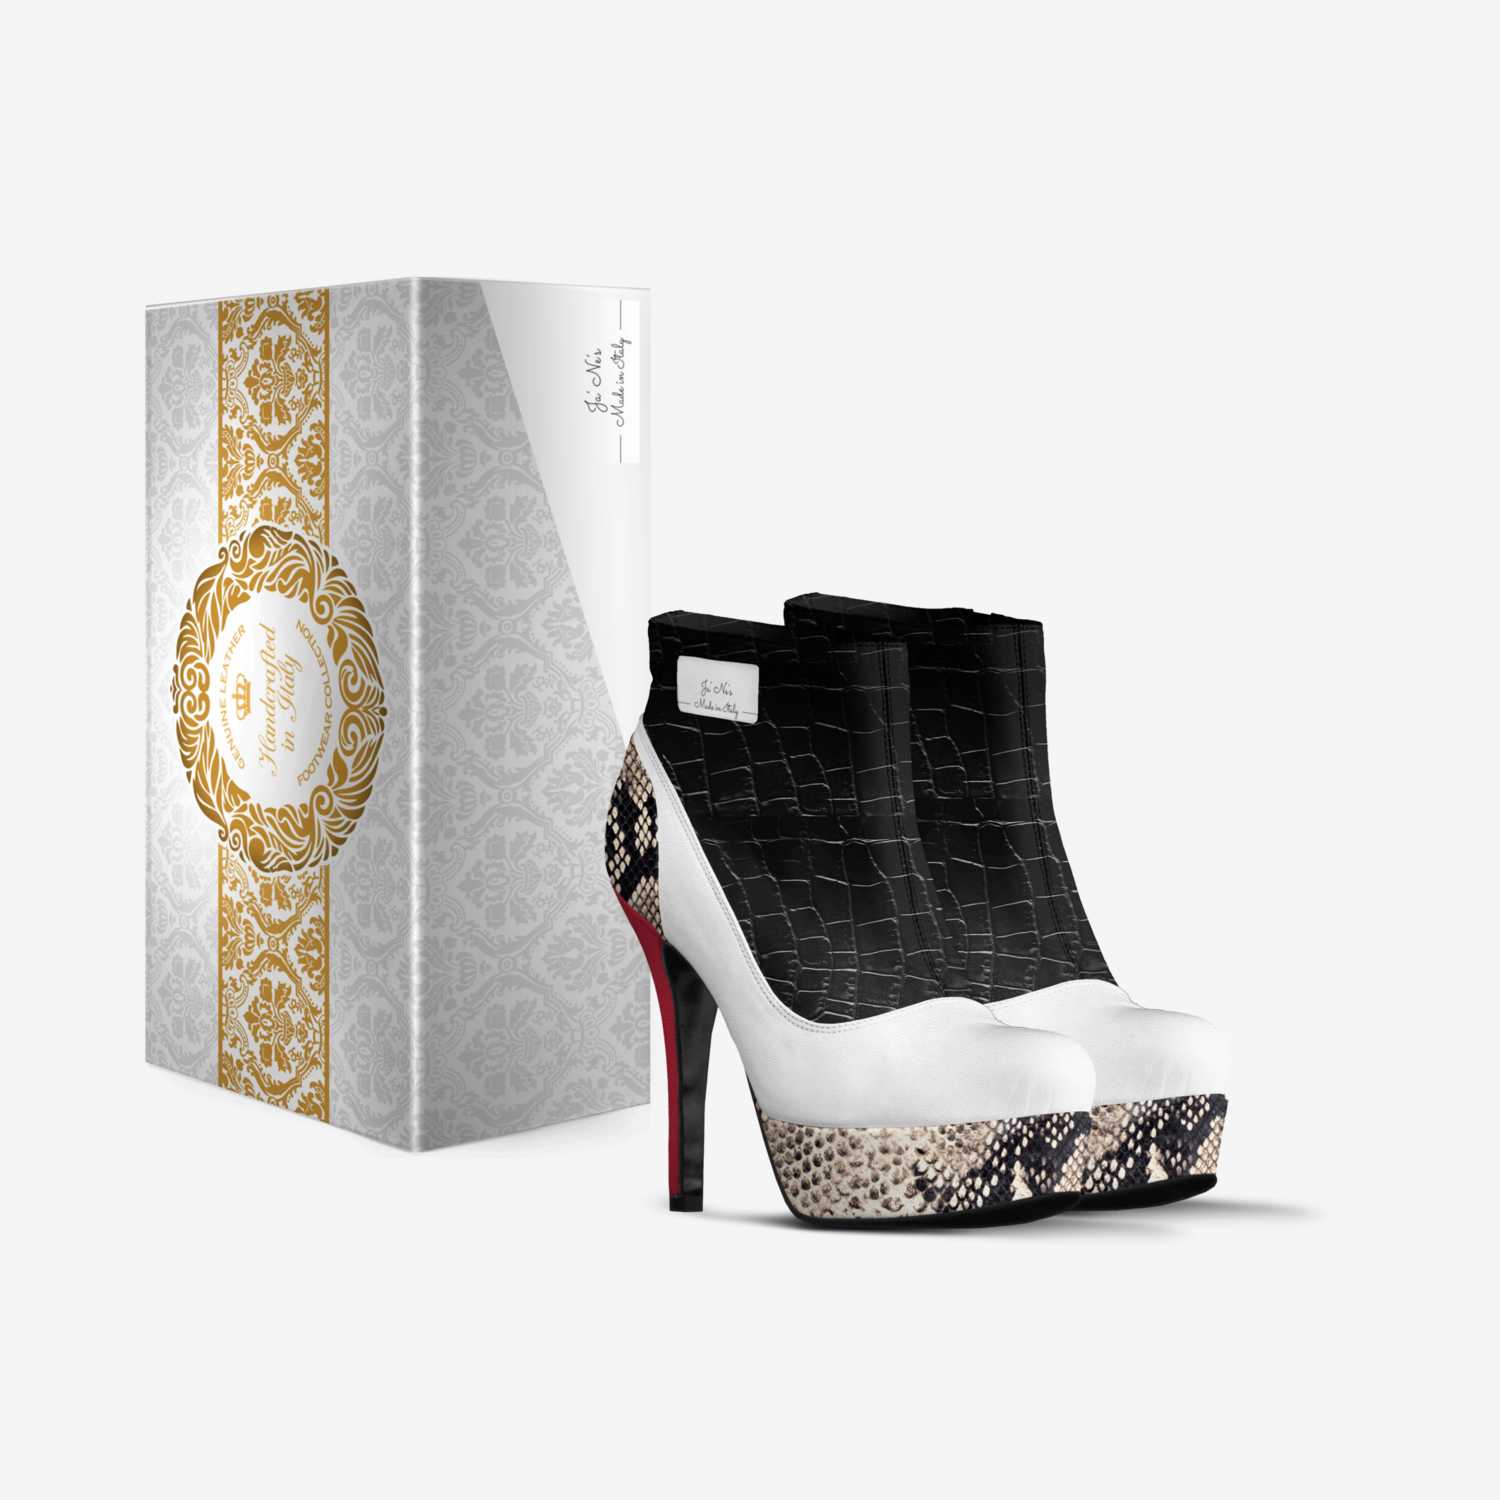 Ja' Ne's custom made in Italy shoes by Jene’ Buchanan | Box view